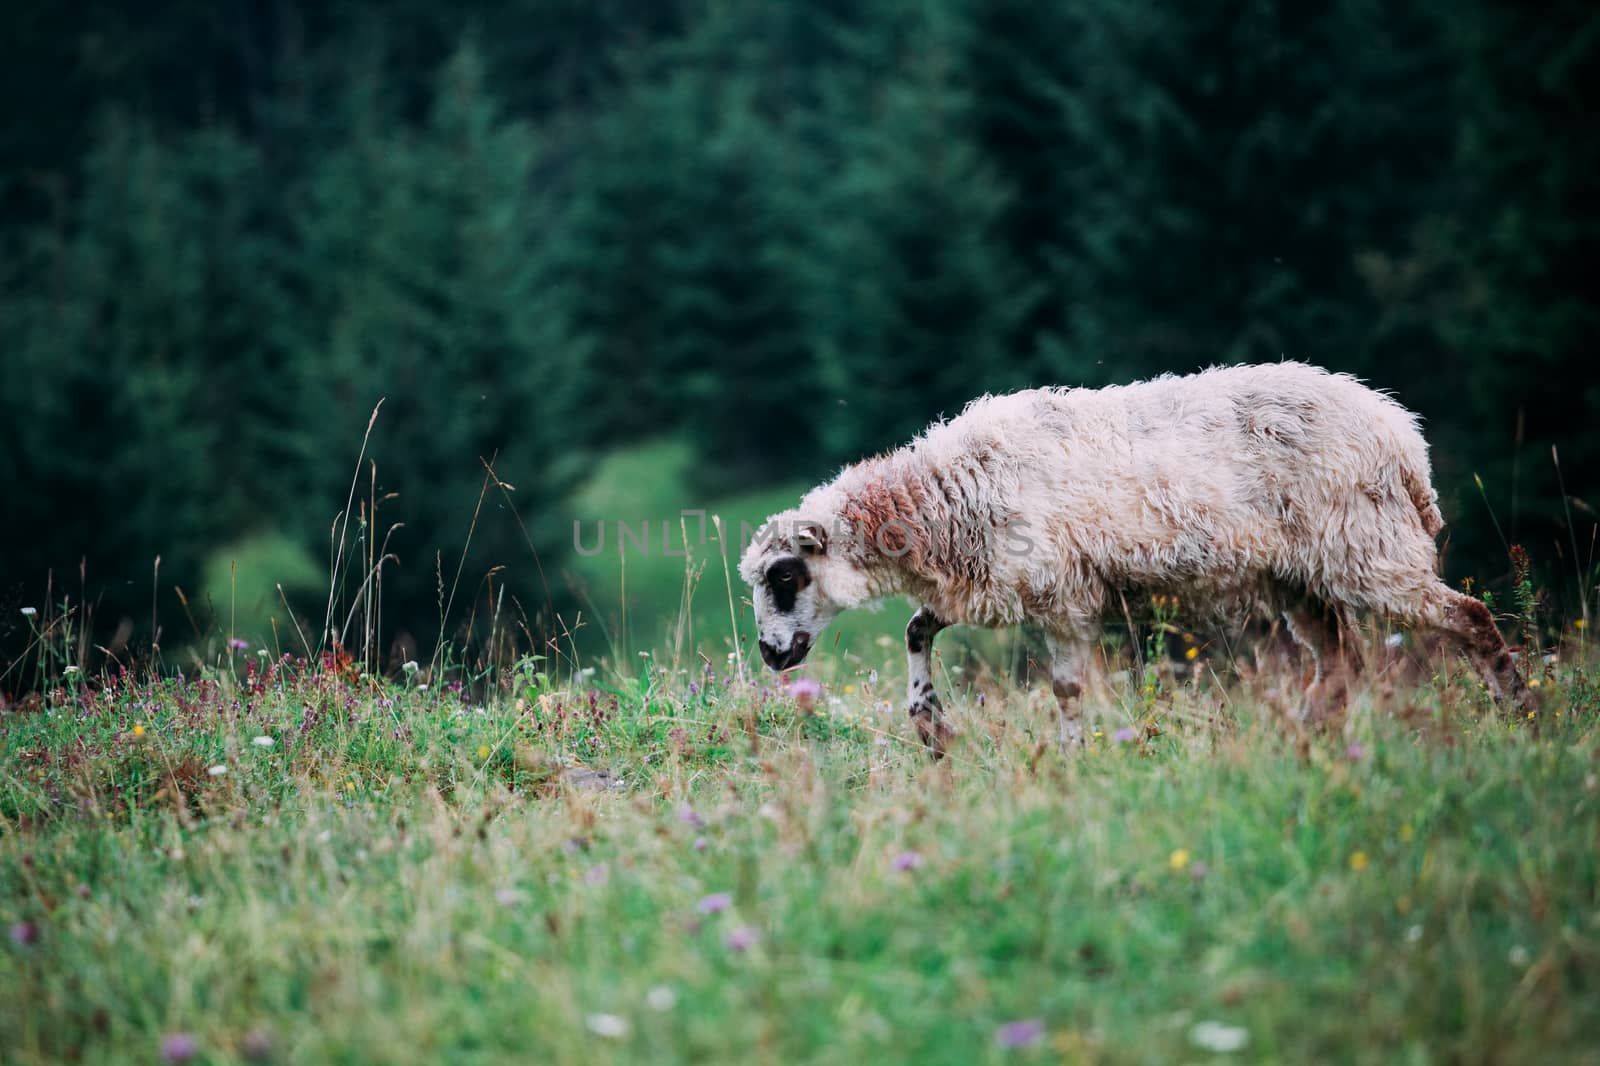 Lamb on a flower hillside. A curly sheep grazes in a meadow.